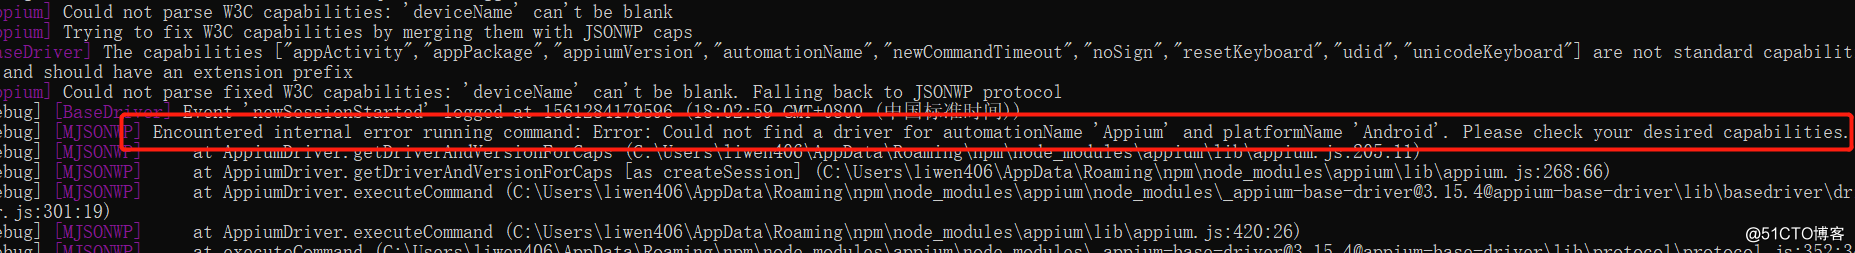 javav language start Appium v1.12.0 start recording error